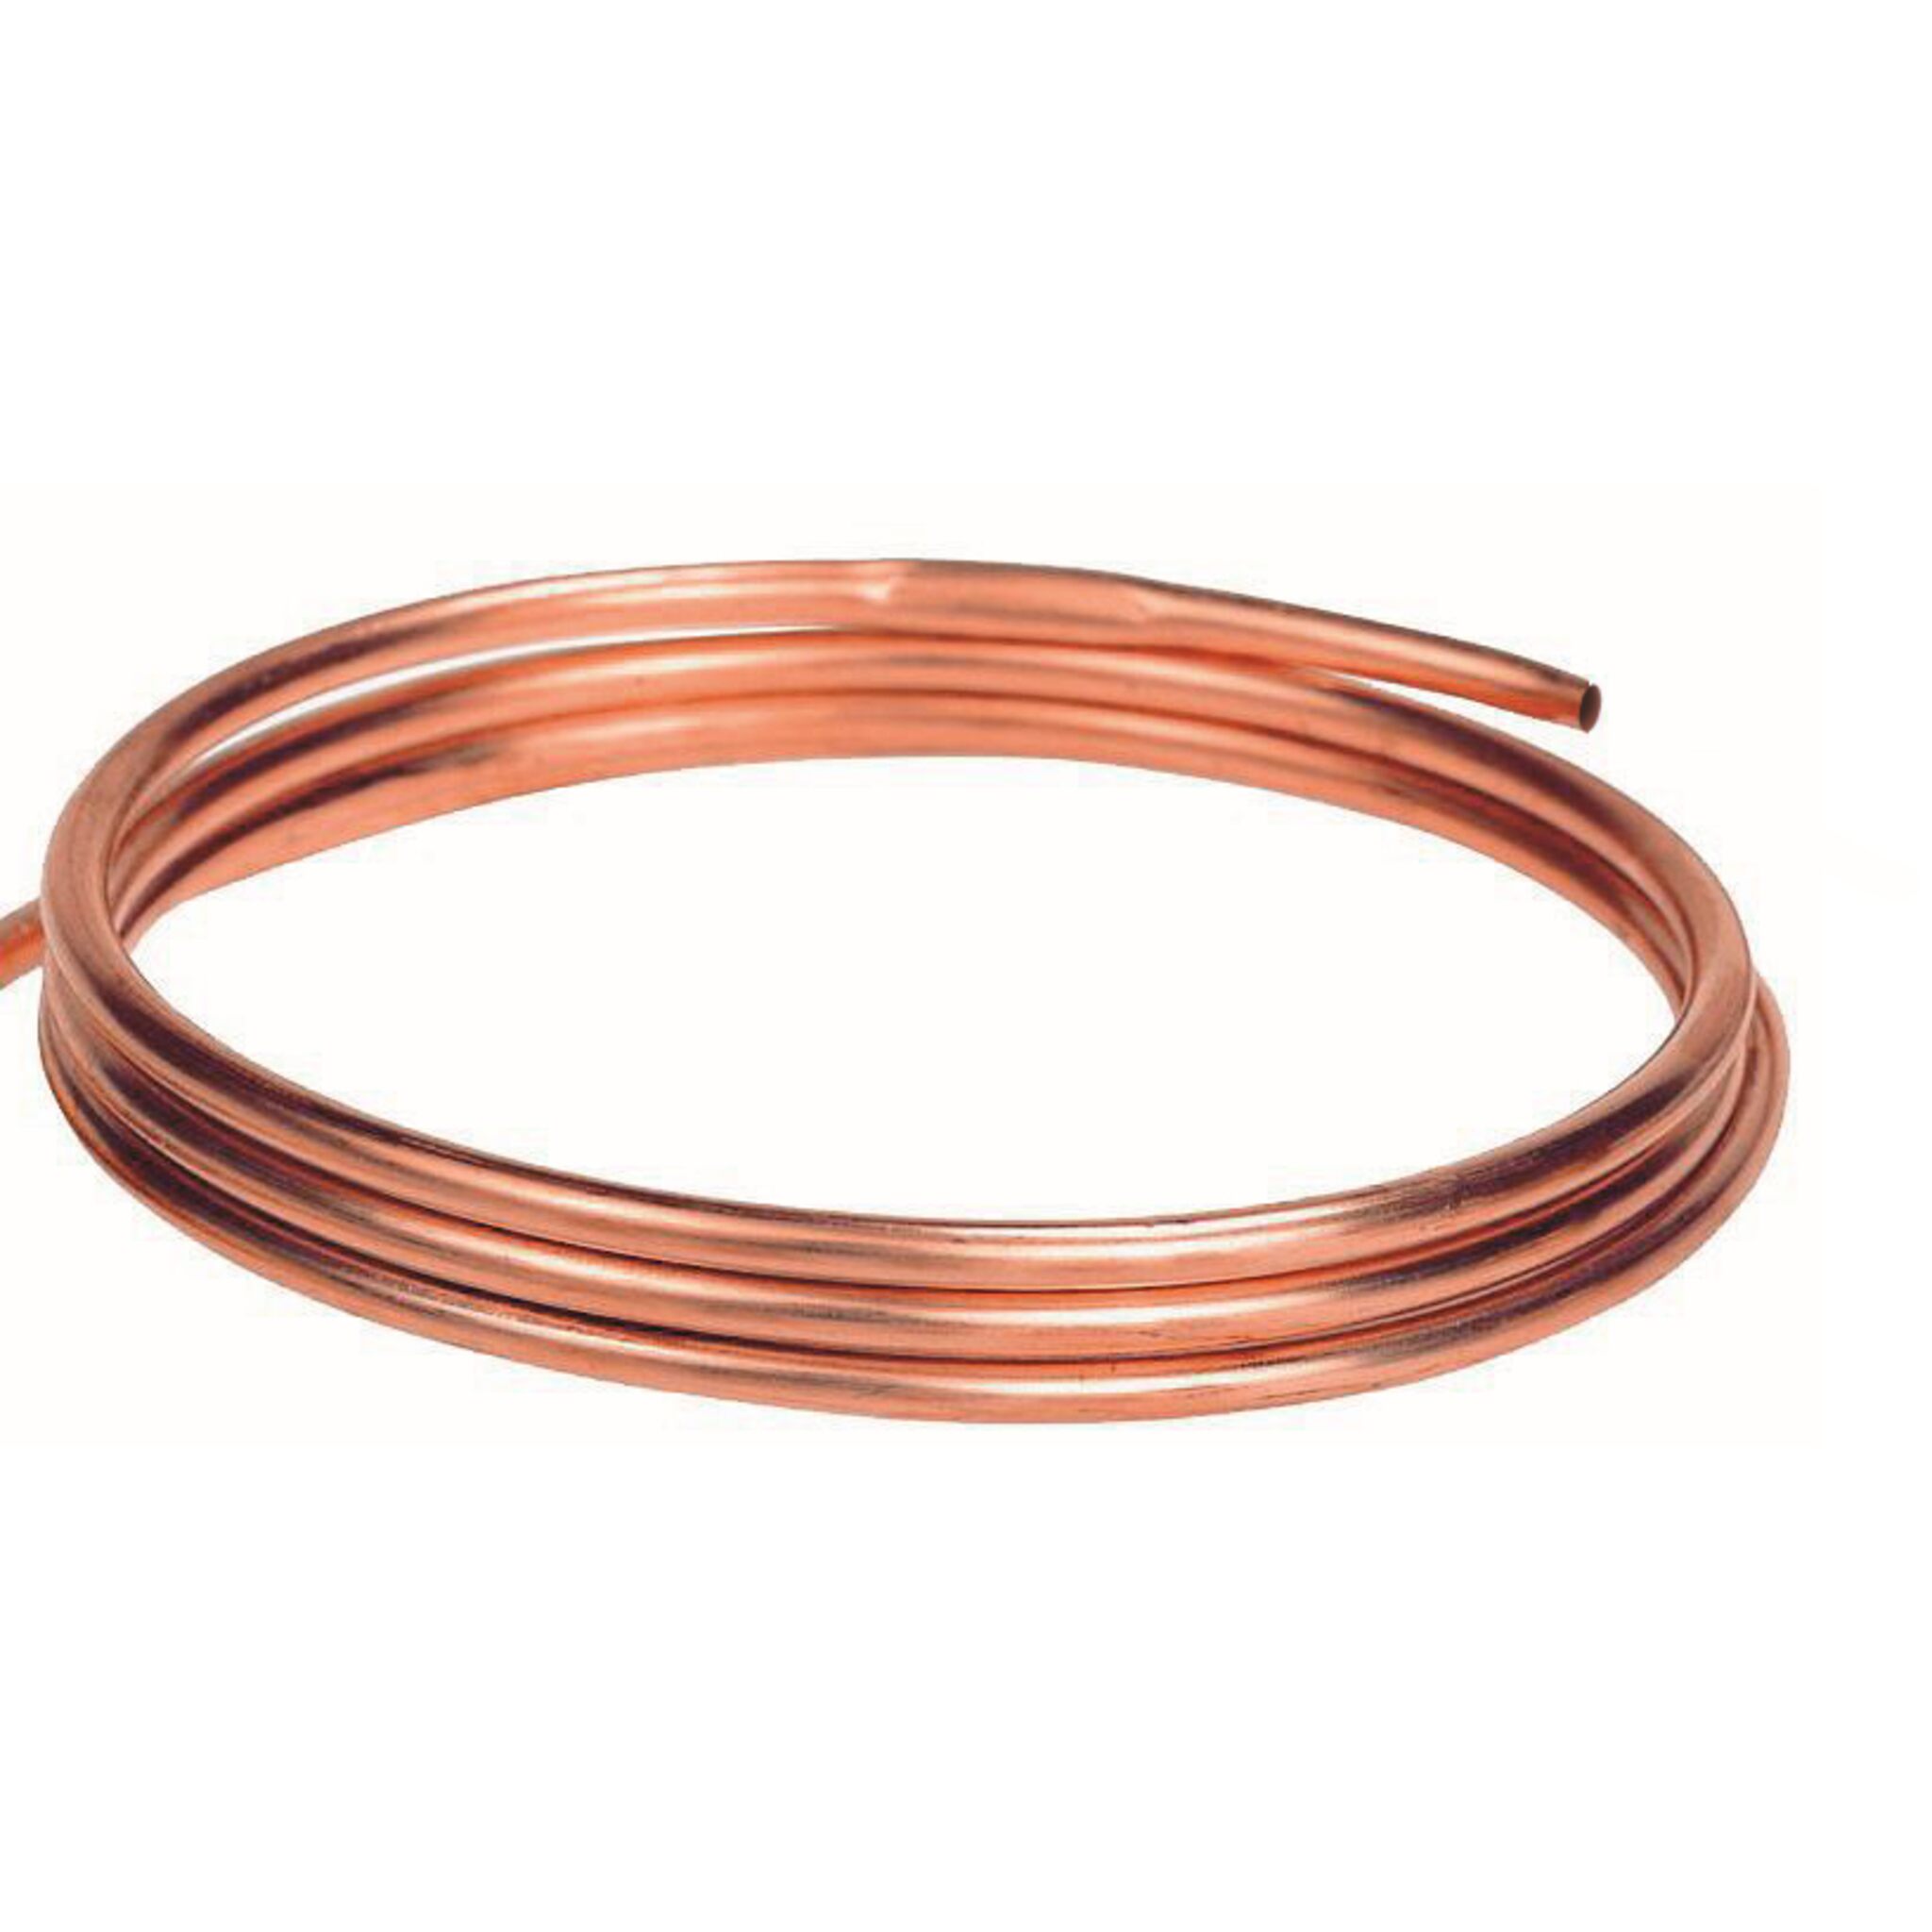 Gas copper pipe 8x1 mm, 5 m